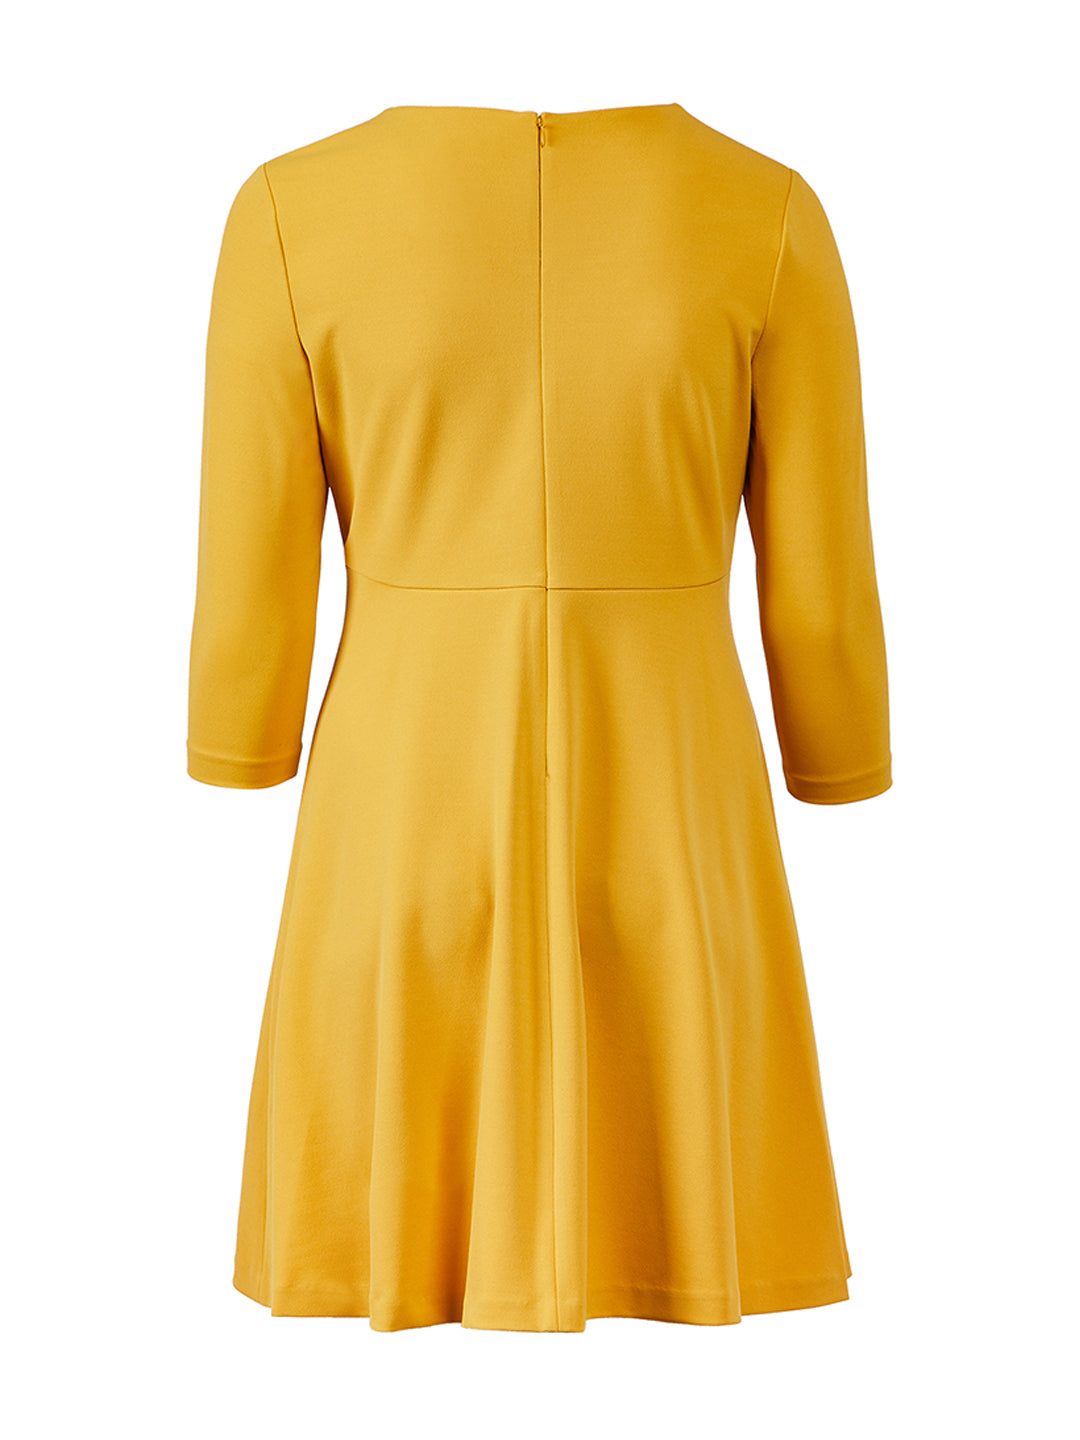 Ochre Fit-And-Flare Dress | Calvin Klein | Gwynnie Bee Rental Subscription